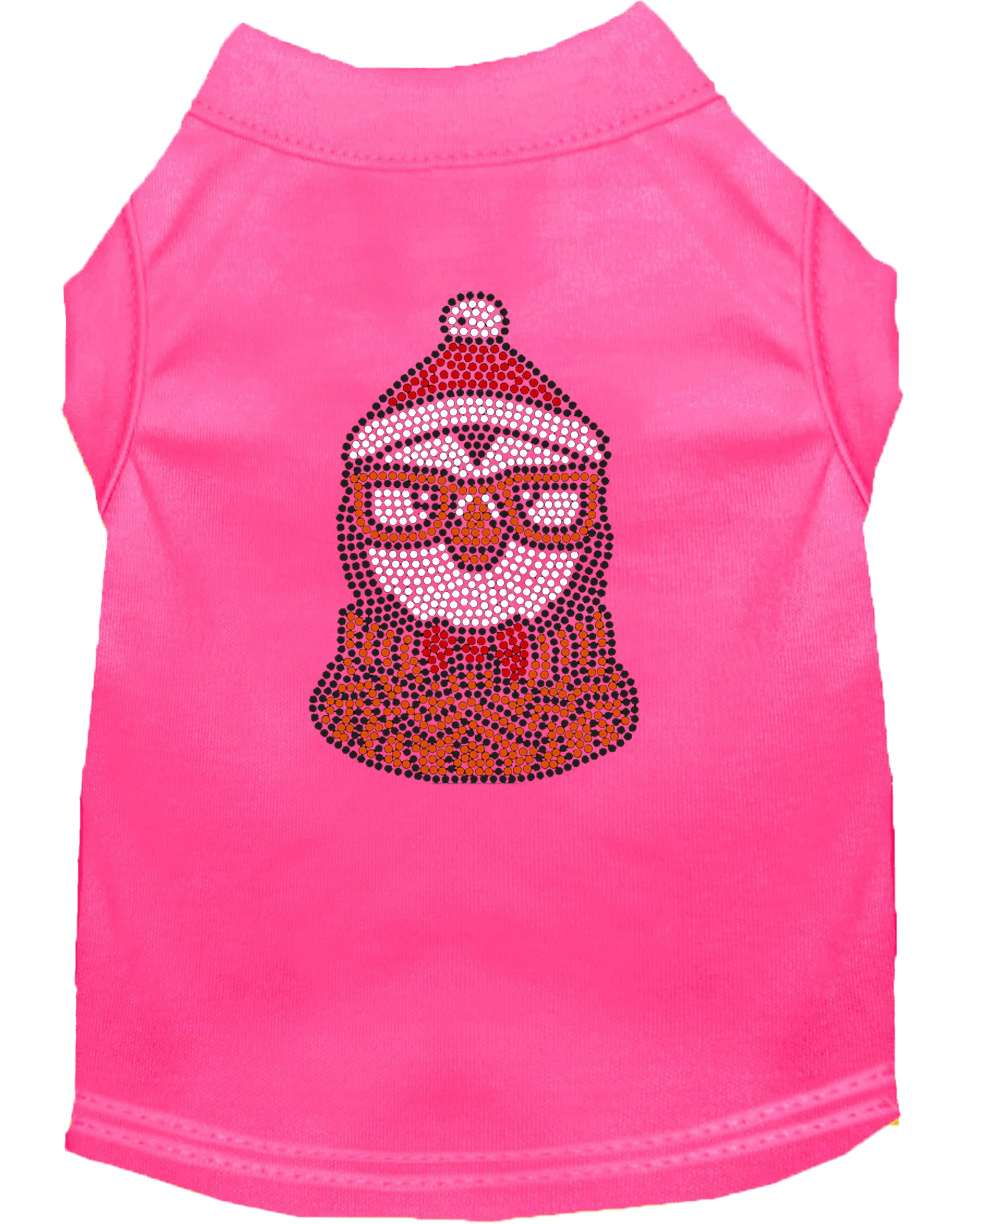 Hipster Penguin Rhinestone Dog Shirt Bright Pink Lg